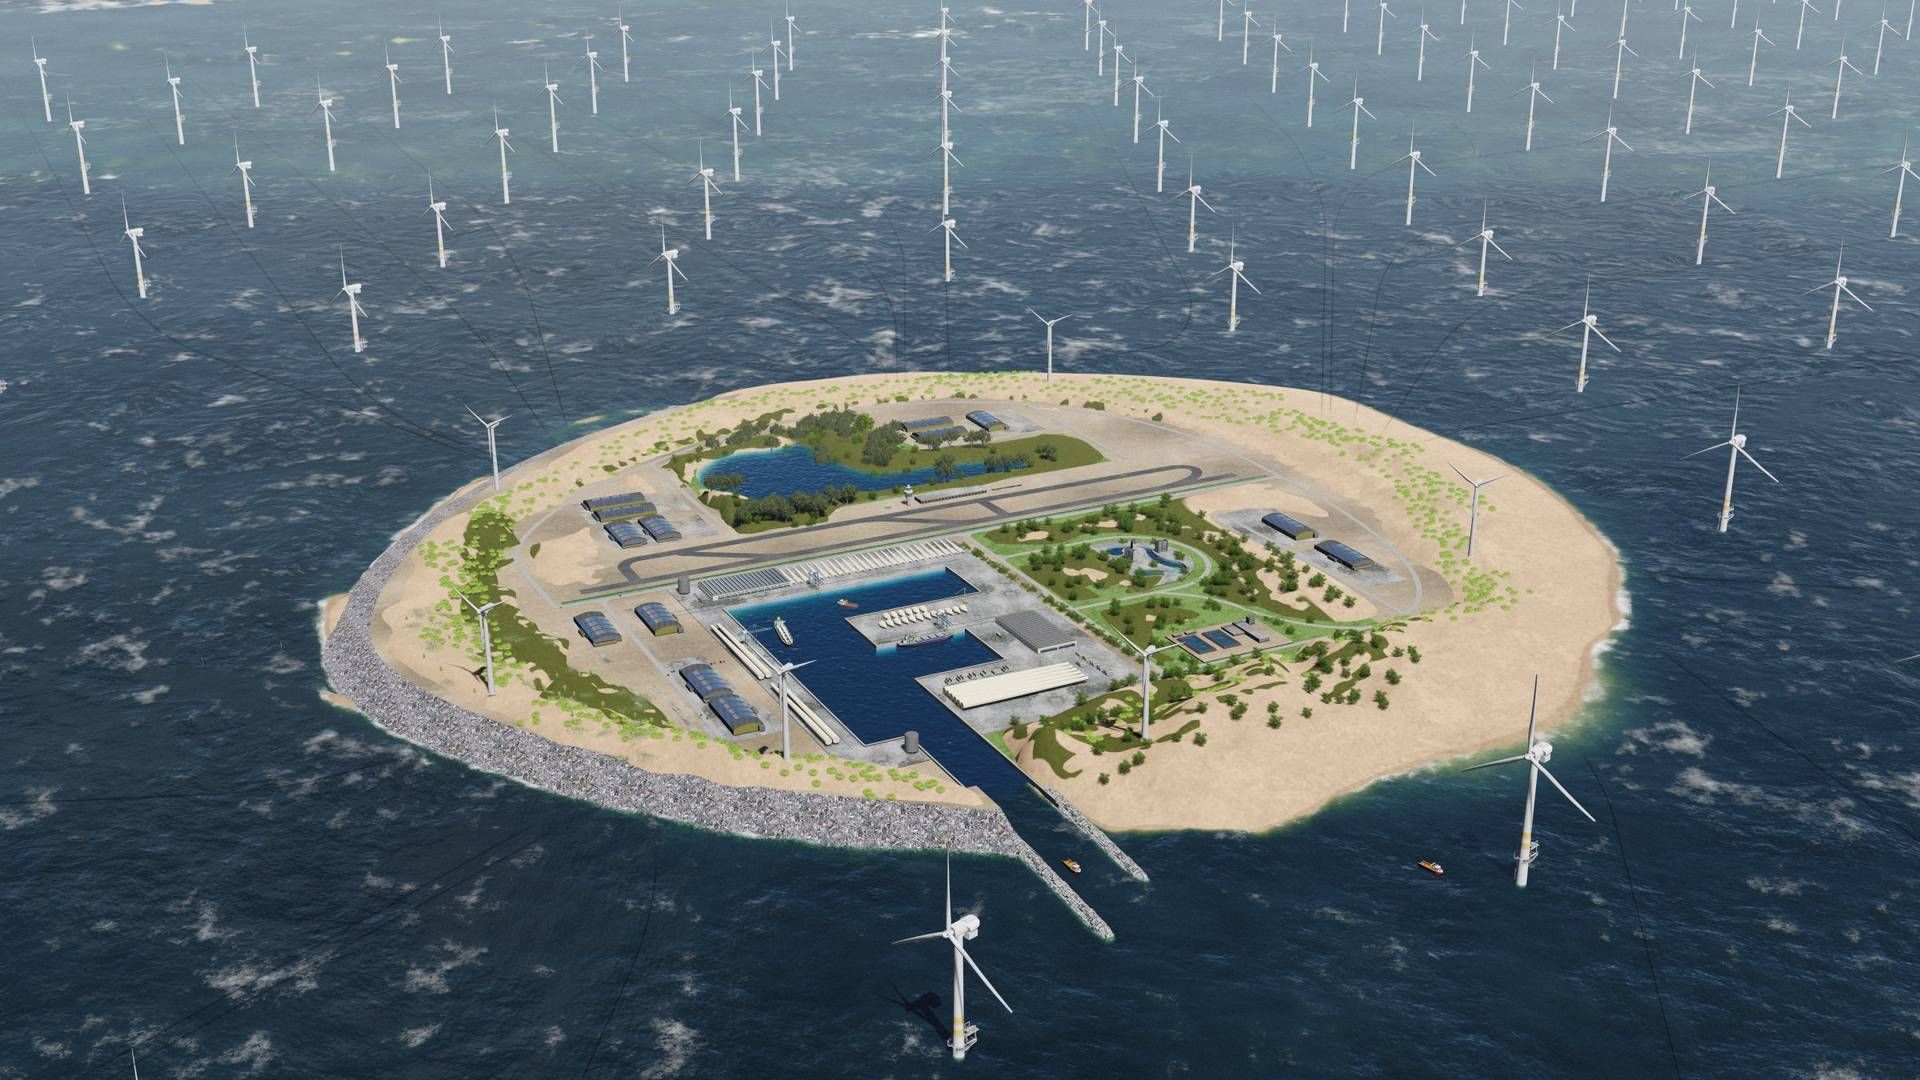 NY UTENLANDSKABEL: Danske Energinet og tyske Amprion vil bygge en ny utenlandskabel mellom landene i forbinelse med satsing på energiøy i Nordsjøen. | Foto: Energinet